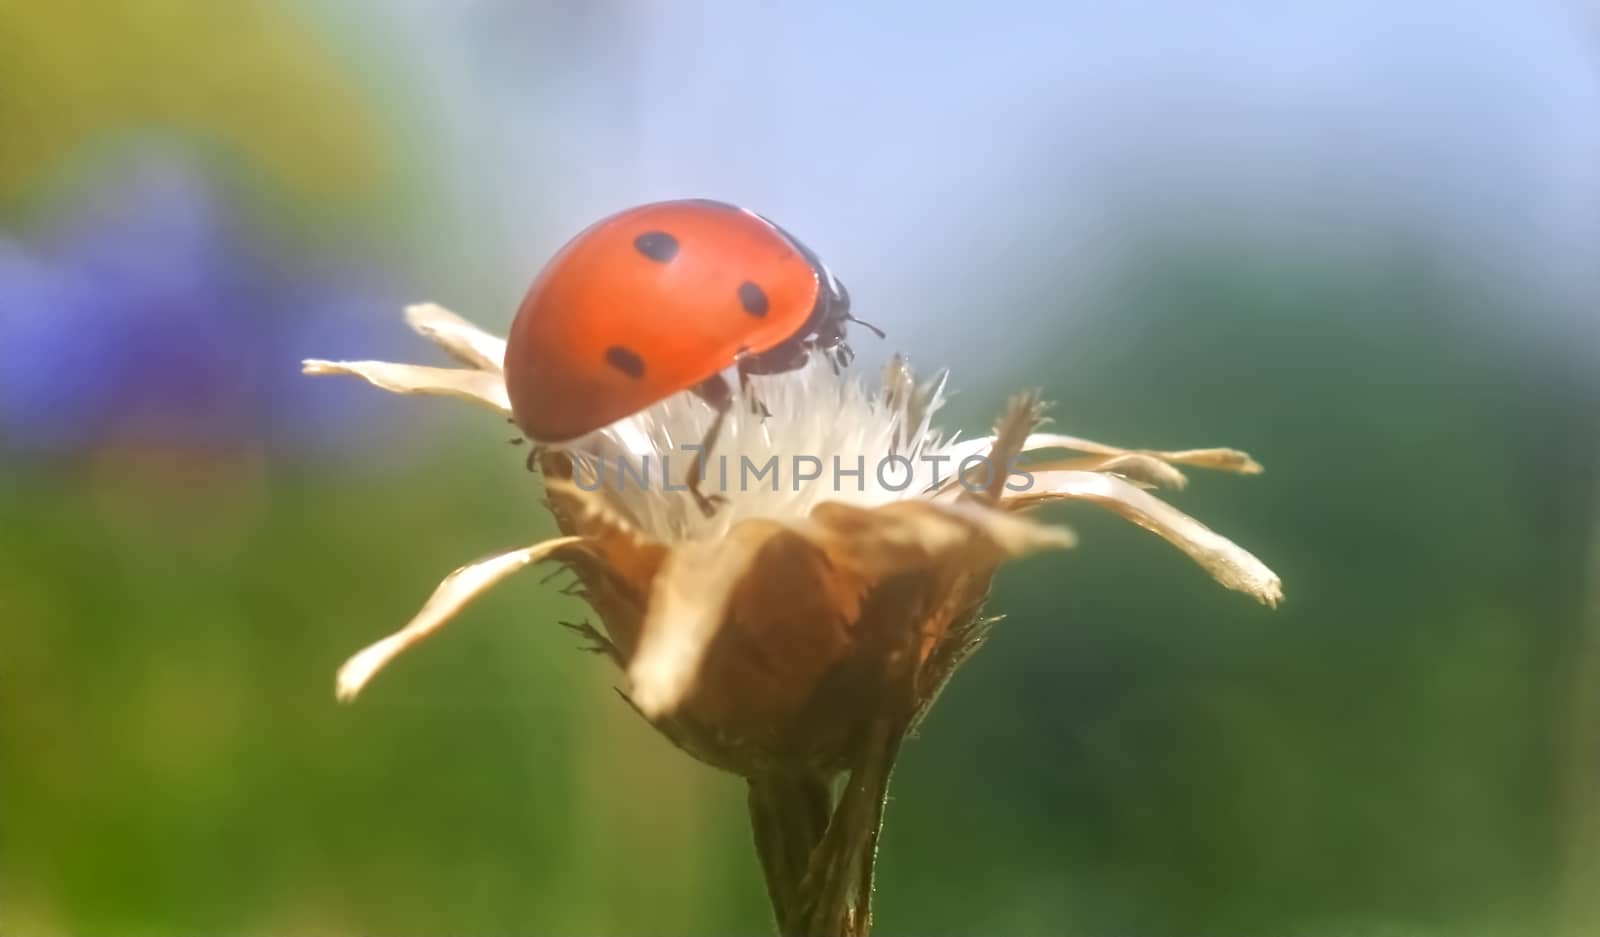 Red ladybug with back spots on a flower by Stimmungsbilder